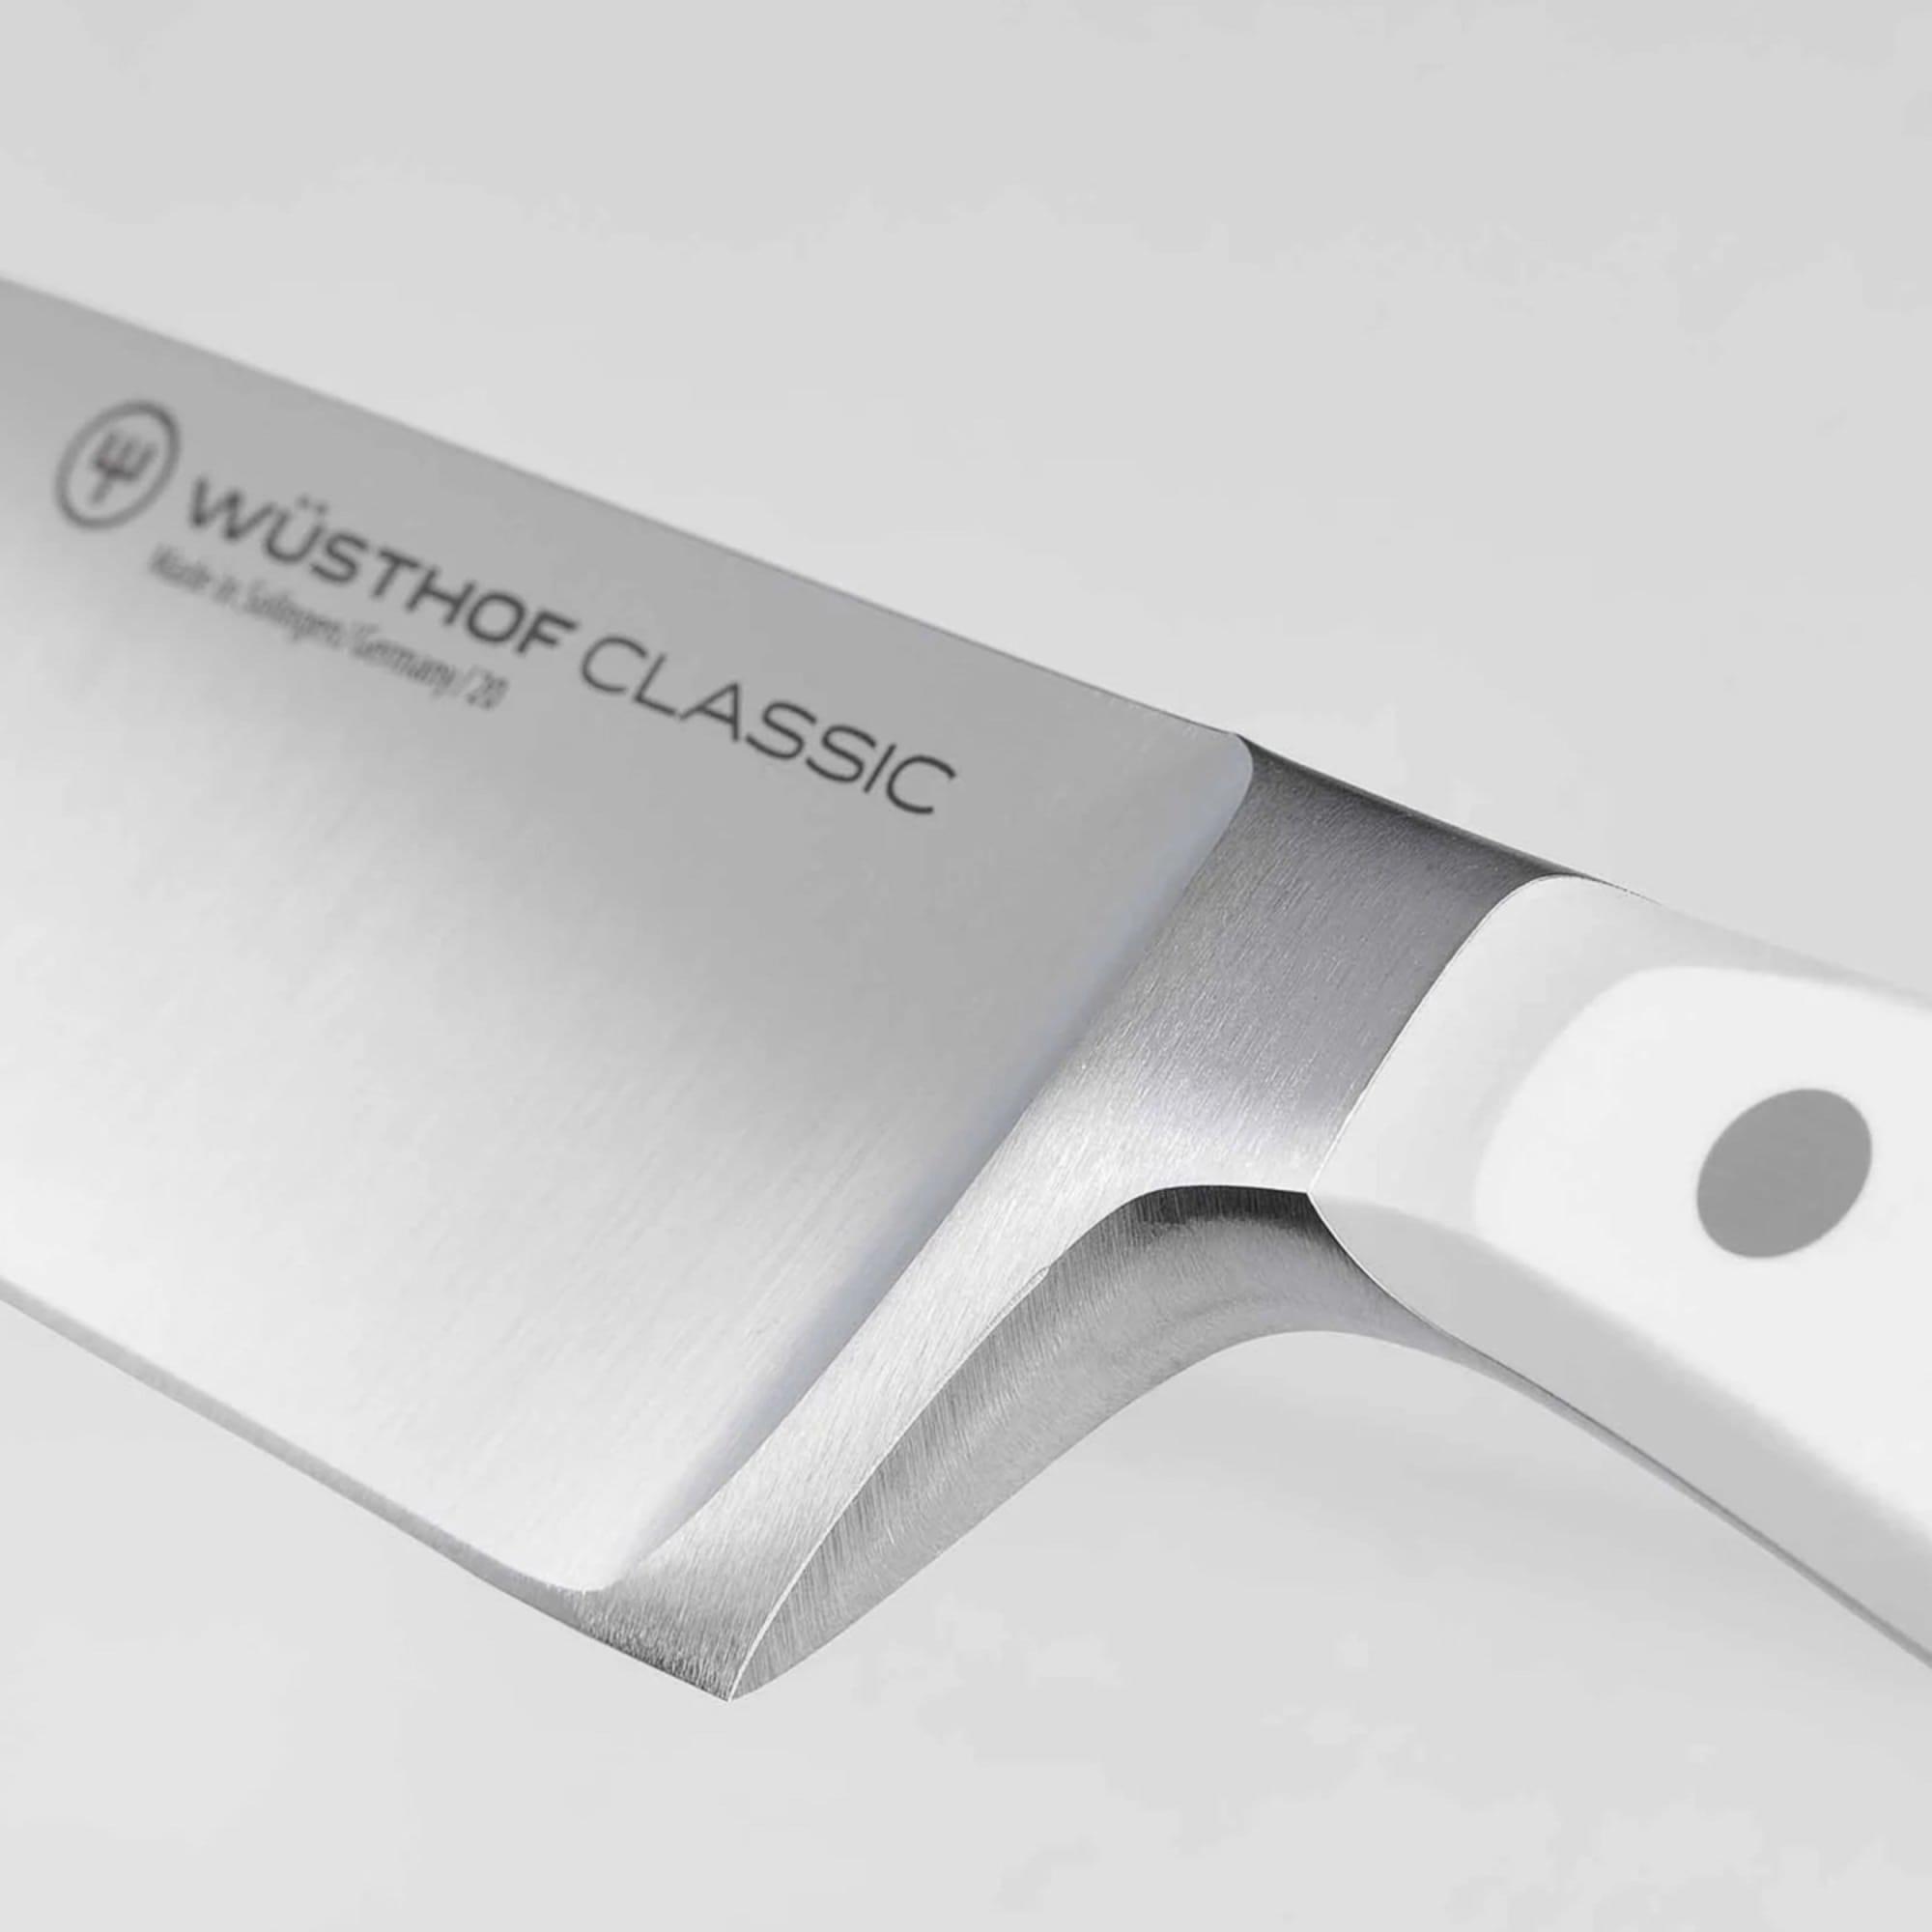 Wusthof Classic White 7pc Slim Knife Block Set with Bread Knife Image 5